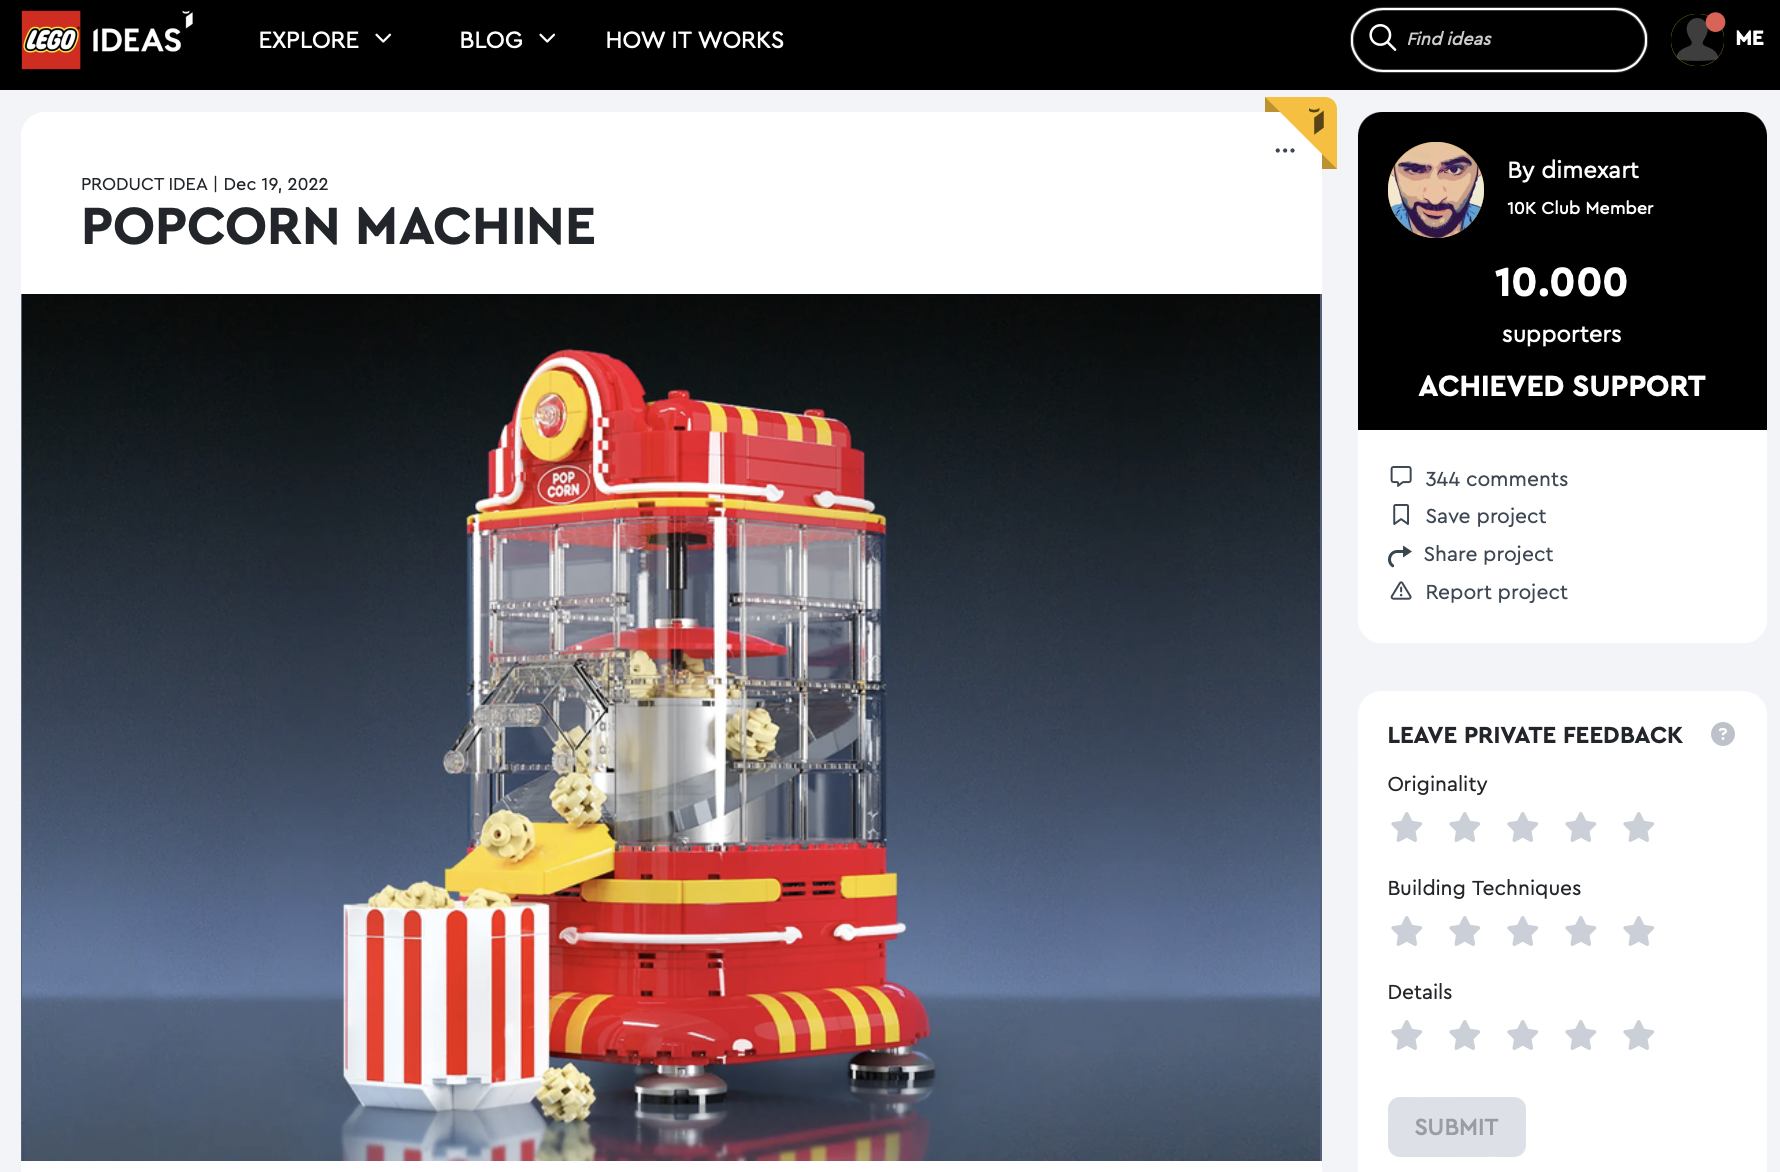 Popcorn Machine raggiunge i 10k su LEGO Ideas